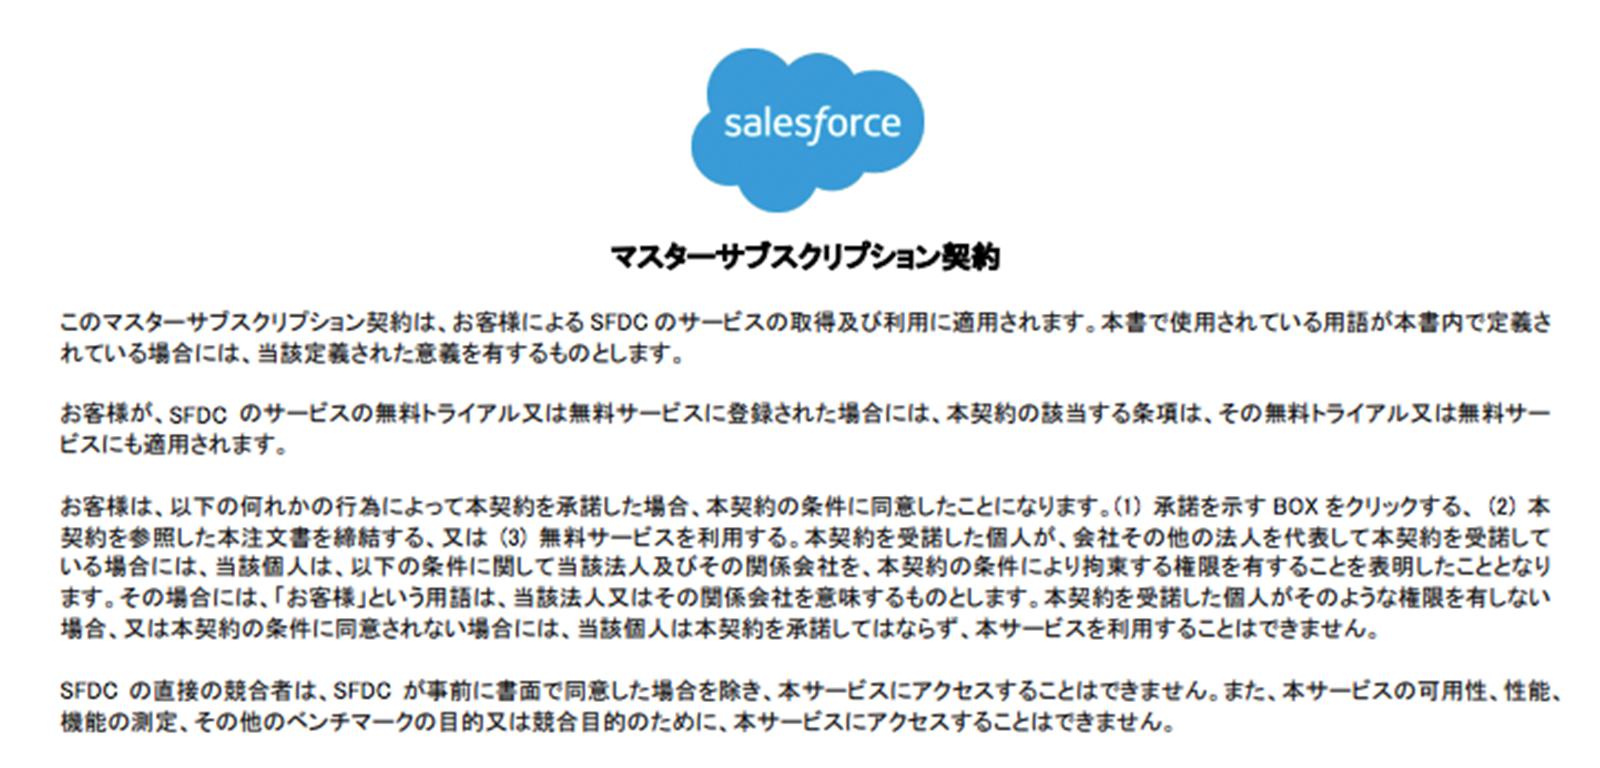 SaaS・サブスクリプションビジネスの利用規約—Salesforce編